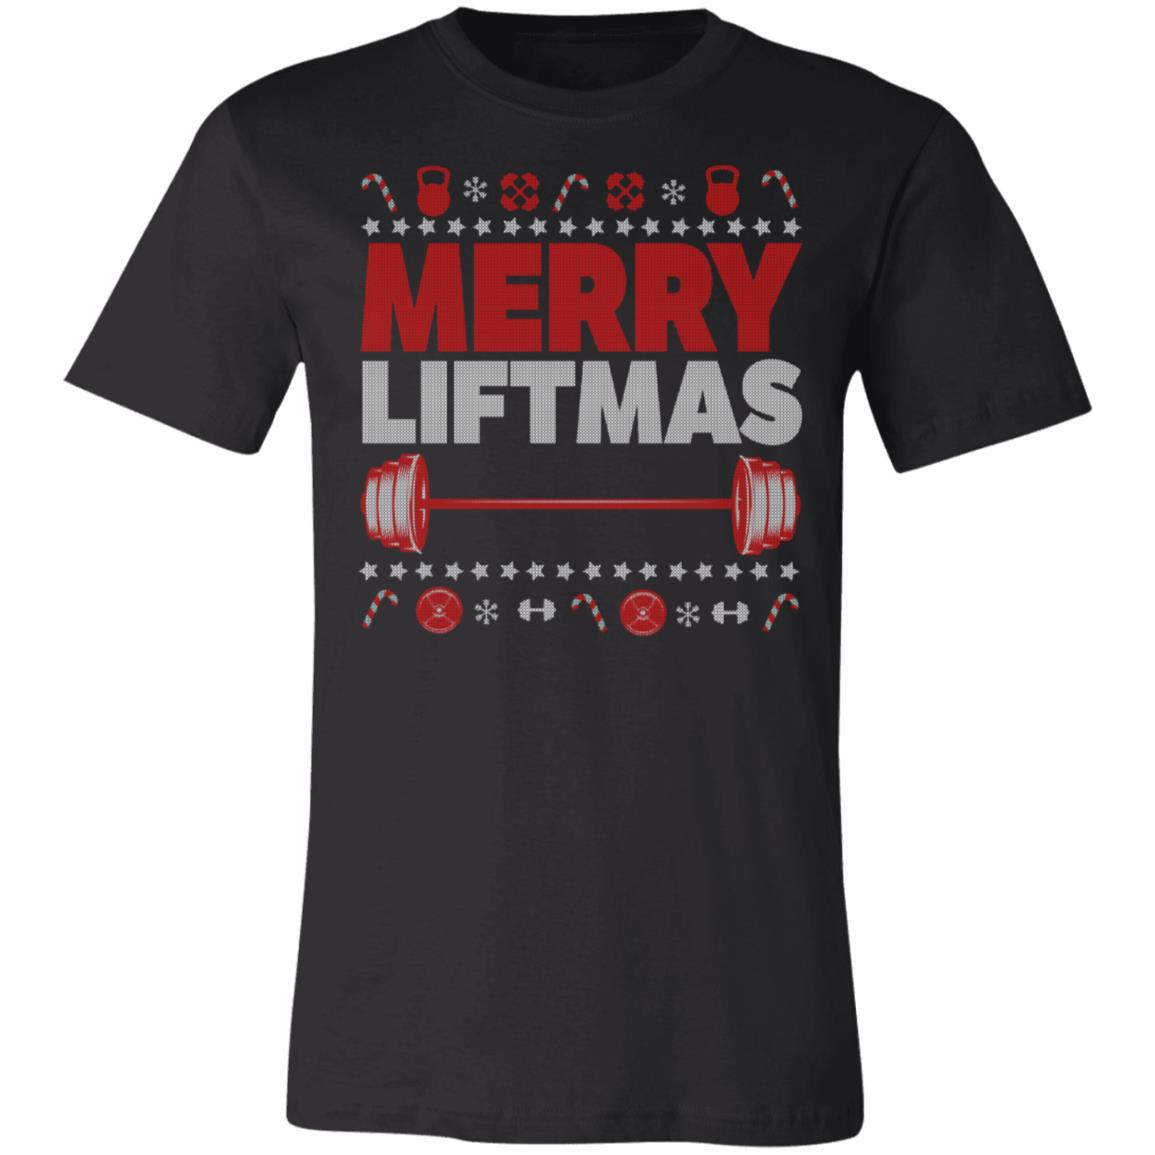 Merry Liftmas T-Shirt 2